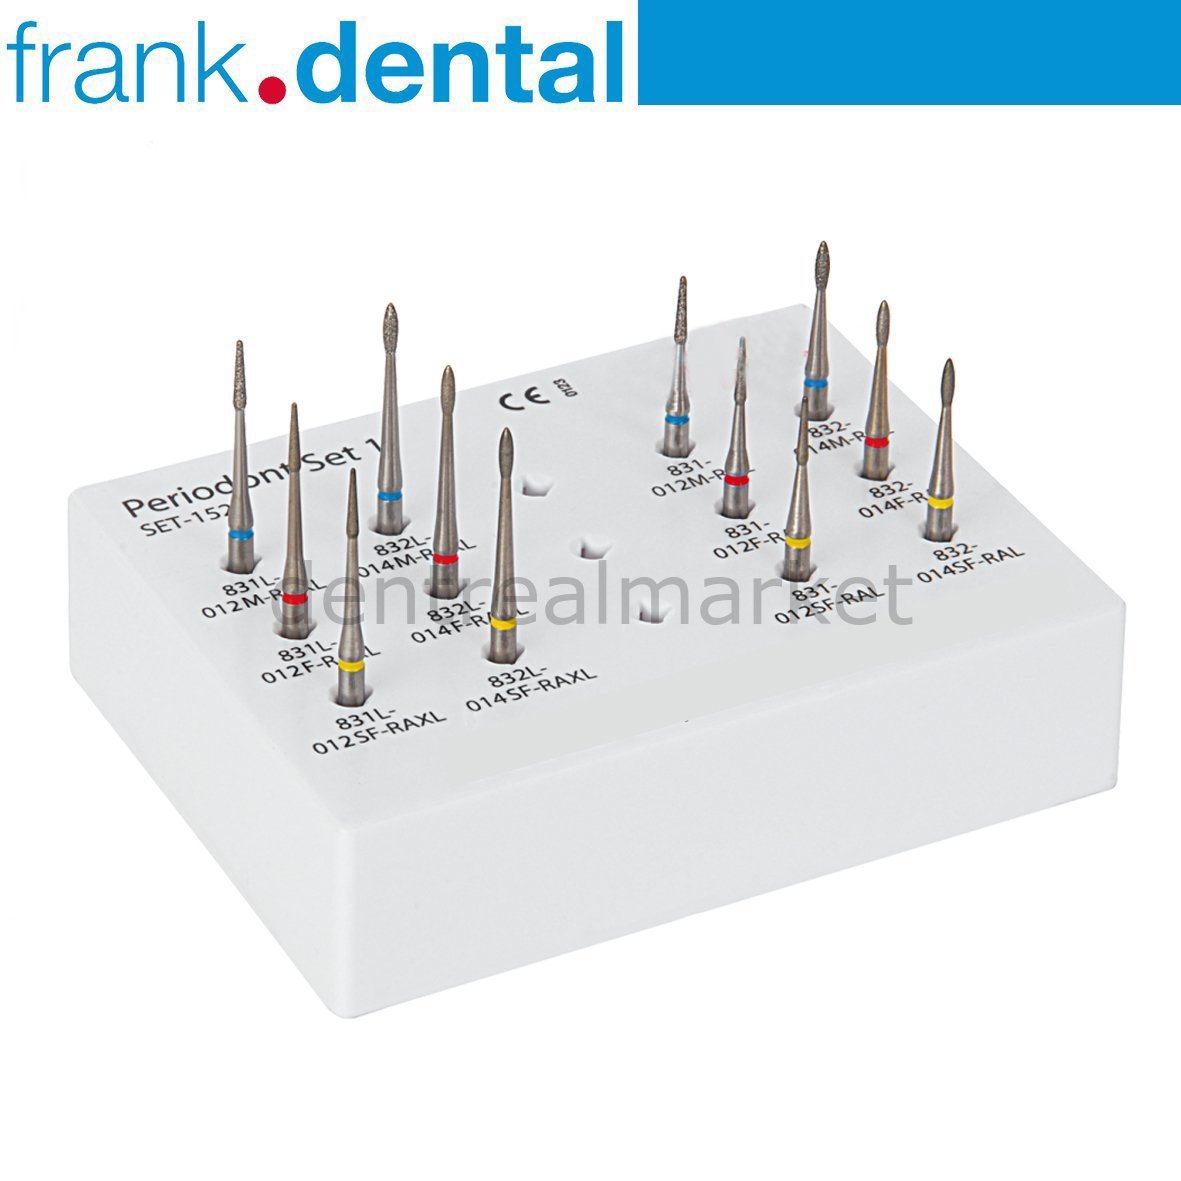 DentrealStore - Dentreal Periodontal Periodontitis Treatment Bur Set 1526